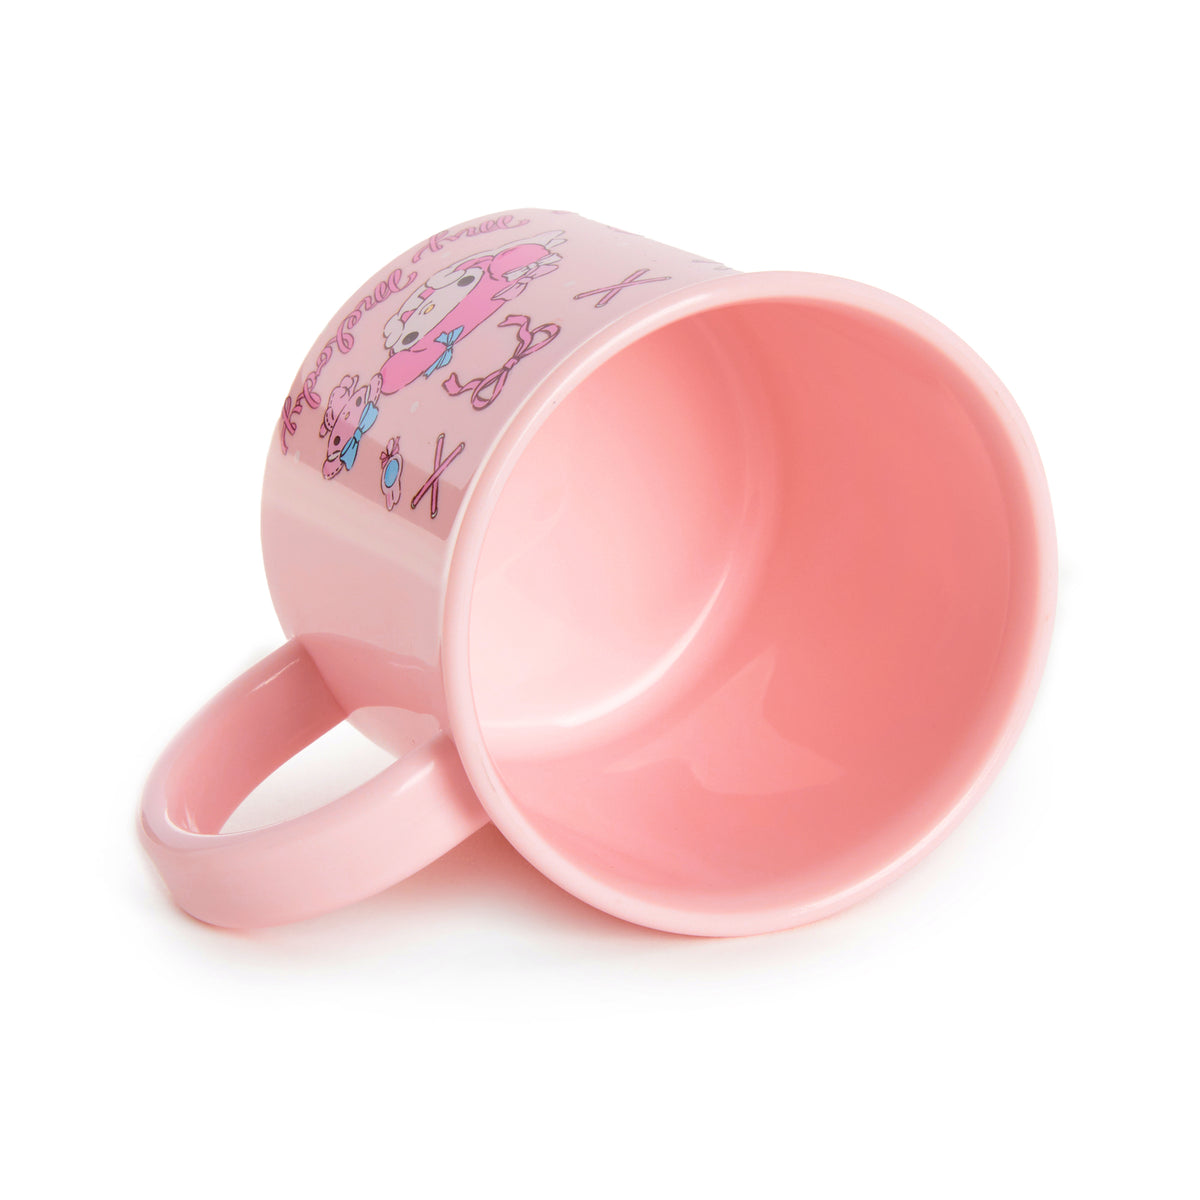 My Melody Plastic Mug (Frills &amp; Lace Series) Home Goods Japan Original   